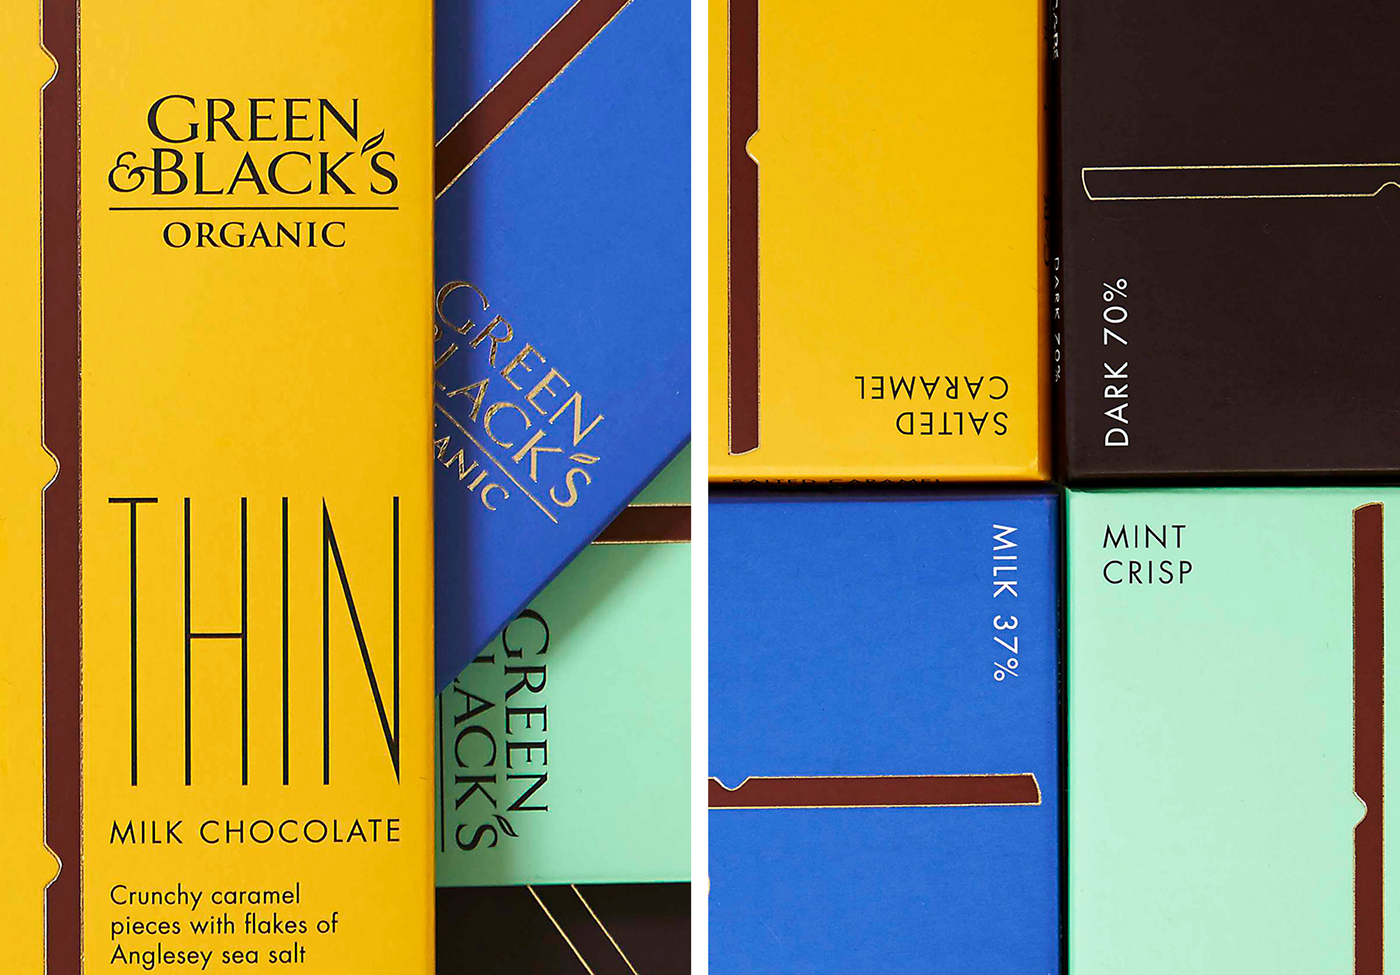 Green & Black's巧克力包装设计